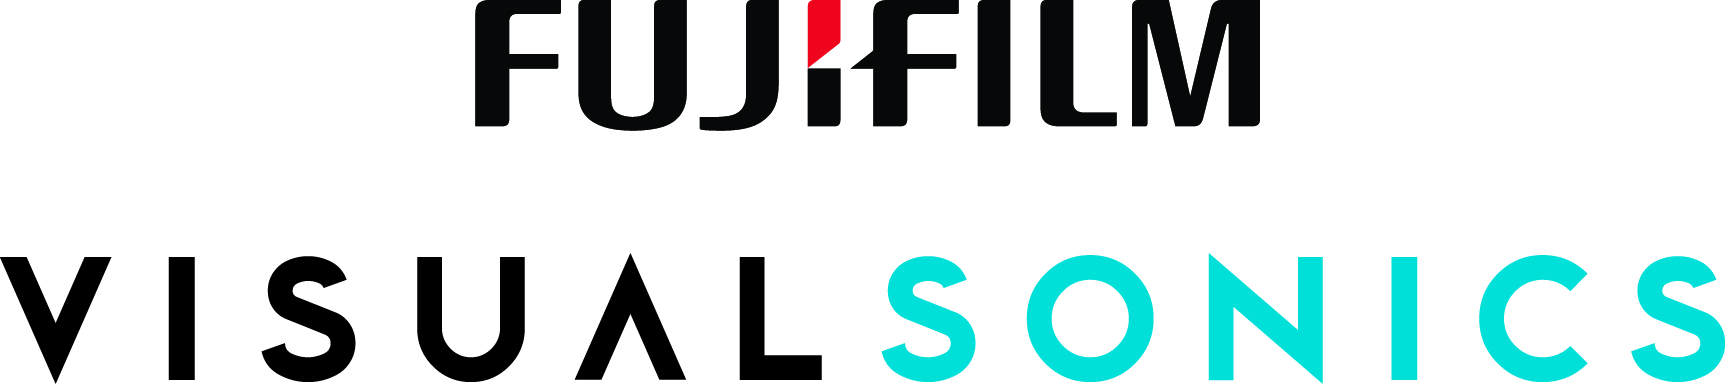 fujifilm-visualsonics-logo-stacked-fullcolour-no-tagline-cmyk.jpg